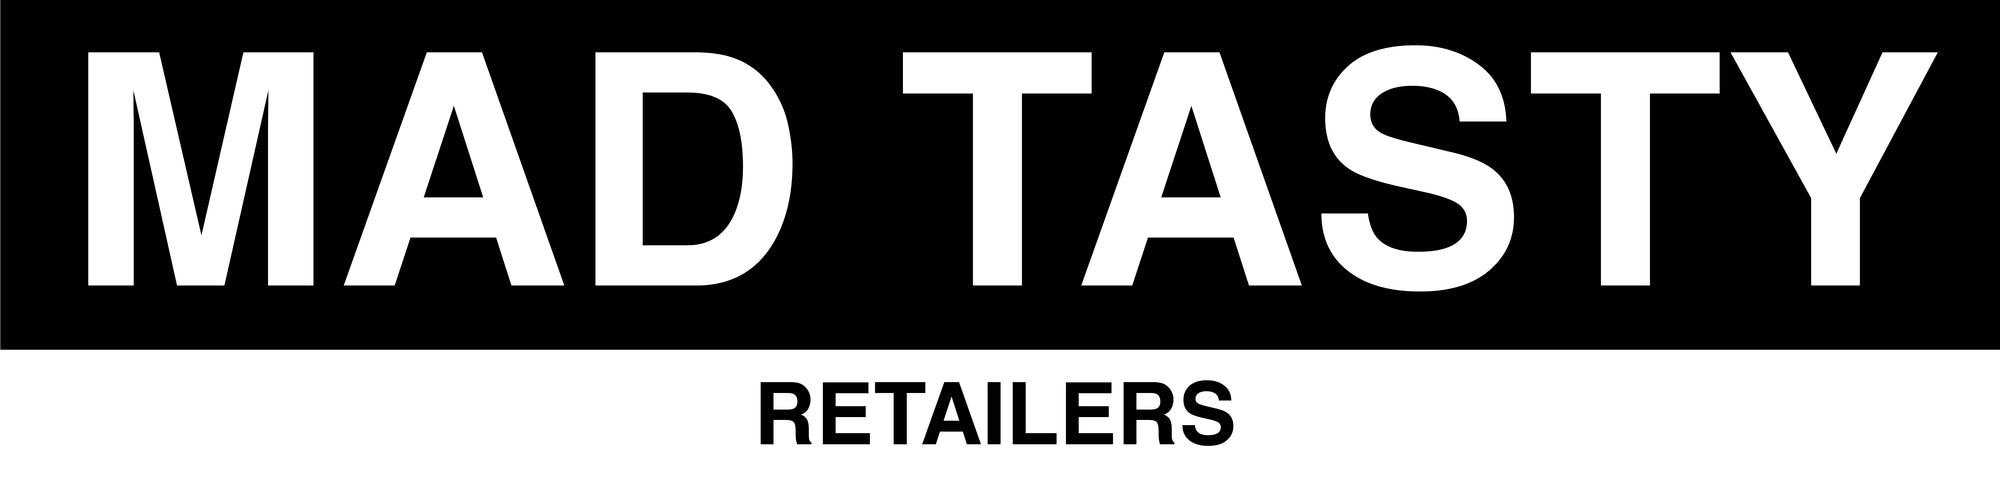 Mad Tasty Retailers Logo